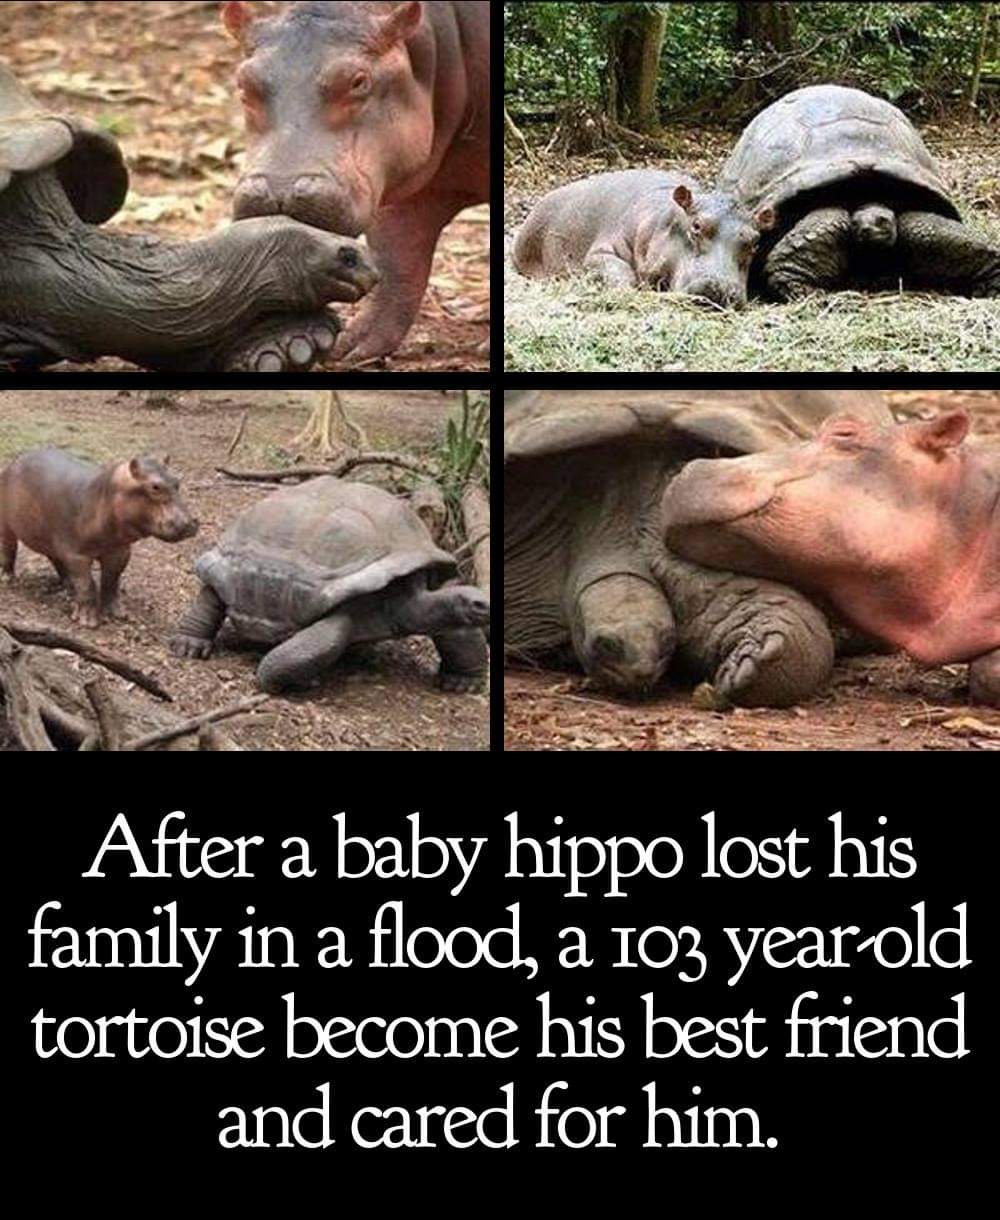 We don't deserve animals...